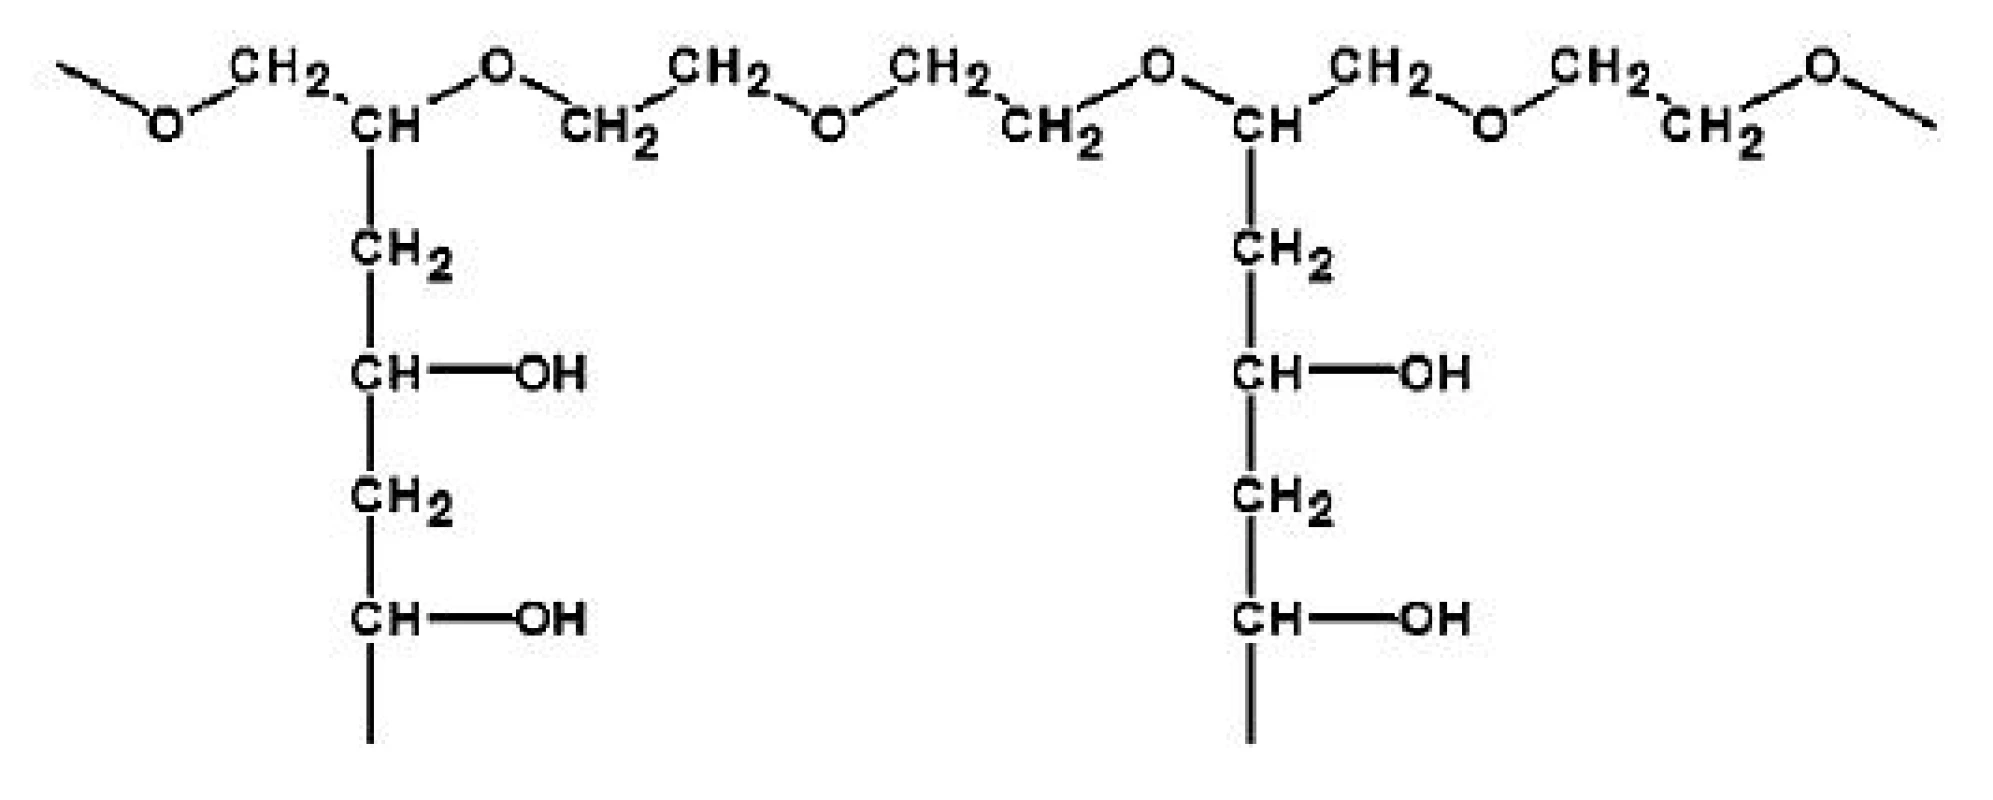 Strukturní vzorec PVA-PEG roubovaného kopolymeru (Kollicoat IR) &lt;sup&gt;24)&lt;/sup&gt;